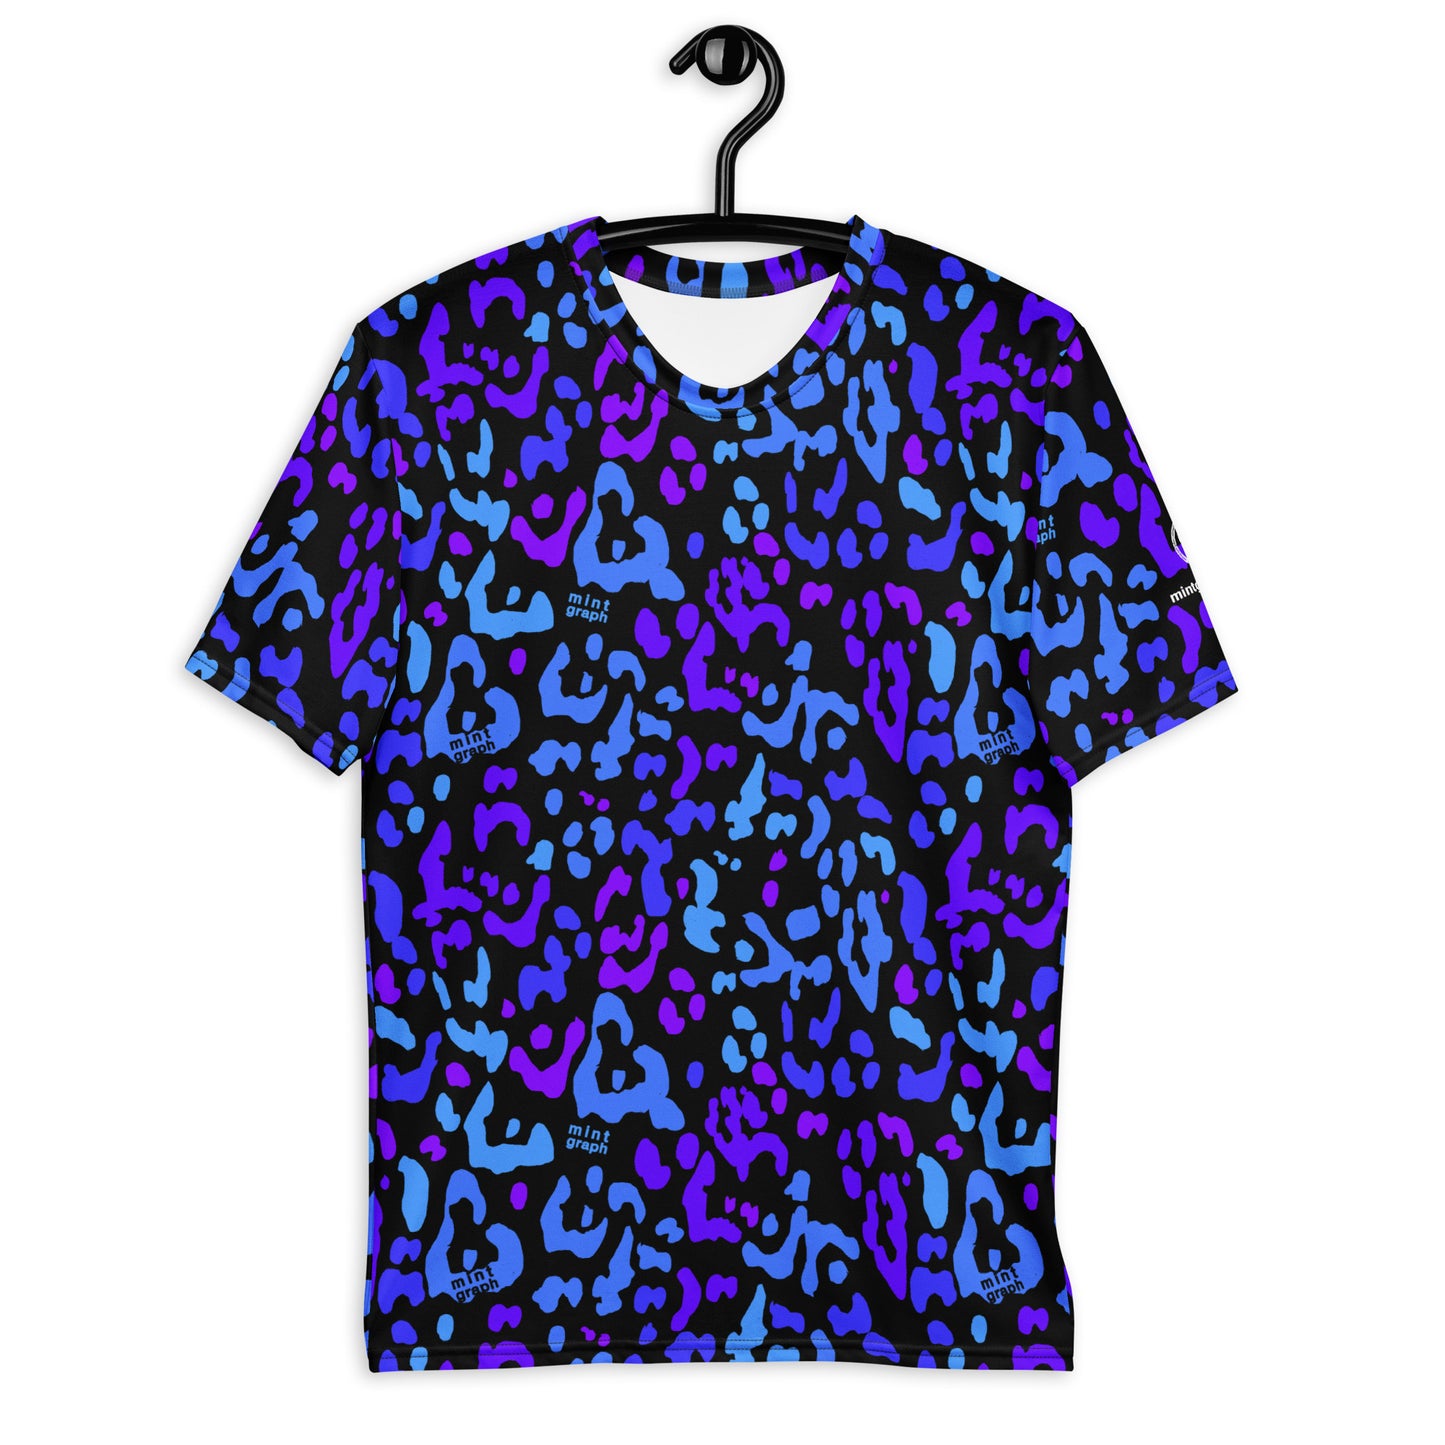 Men's allover print t-shirt - leopard pattern design in blue/purple colors